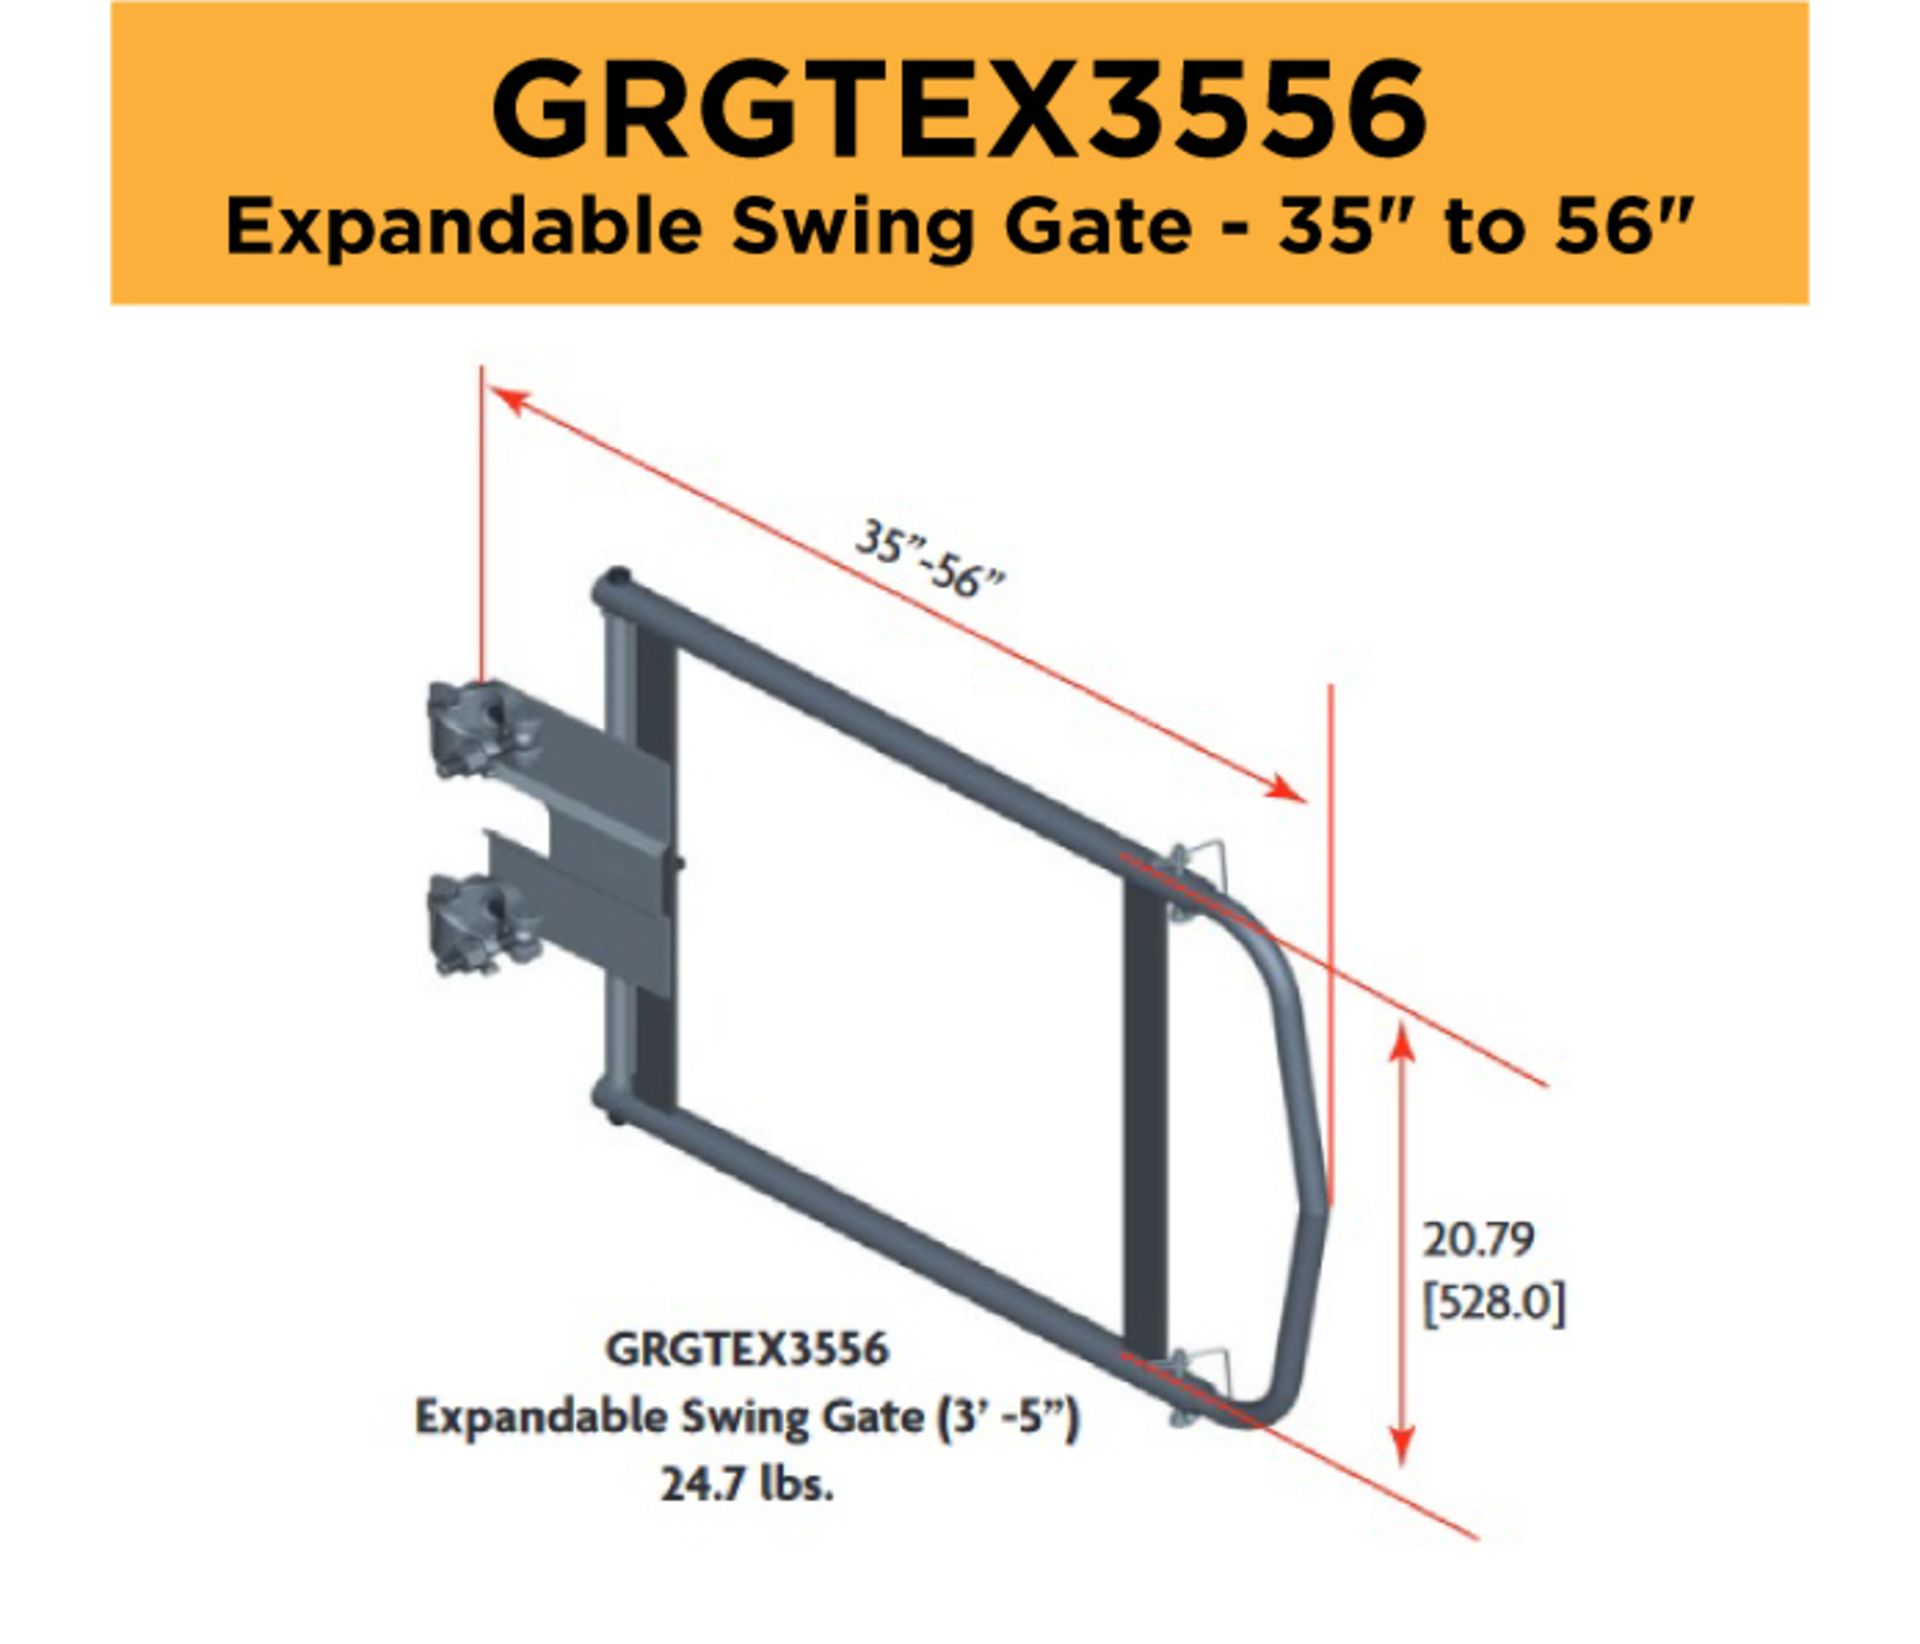 Lot of (160) Universal Swing Gate Expandable - 35" to 56"; Type: GRGTEX3556 - (4) Racks Per Lot -